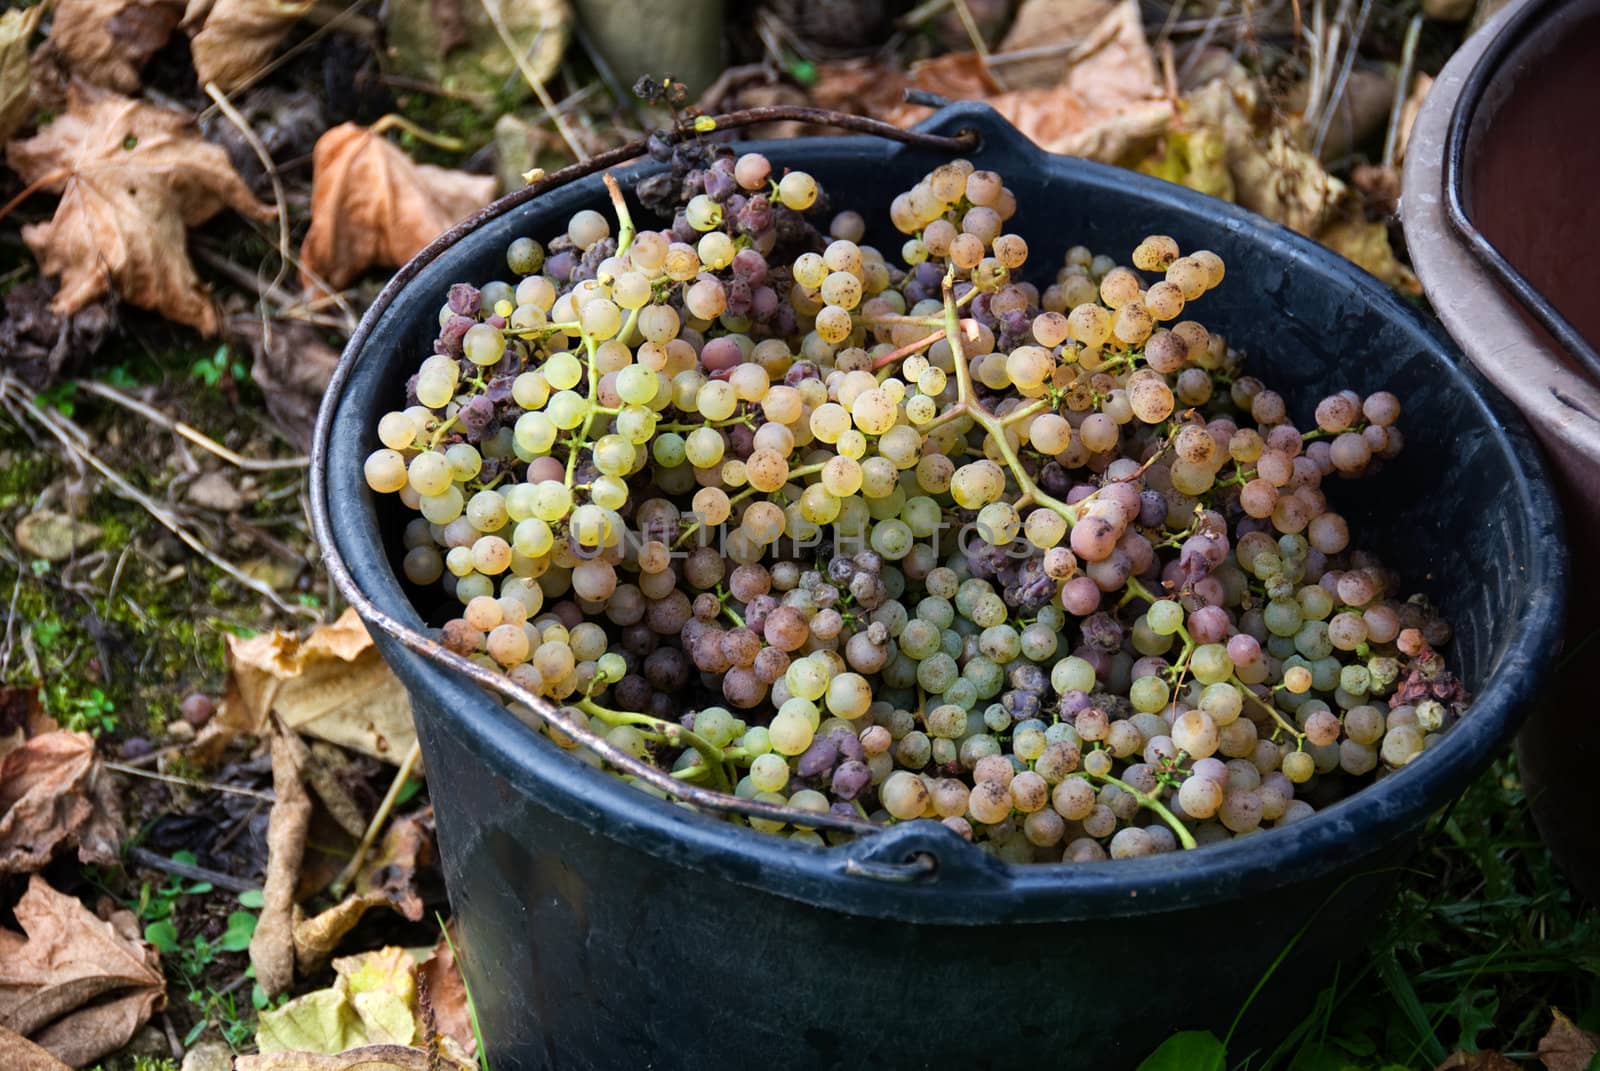 Pail of Grapes by ACMPhoto